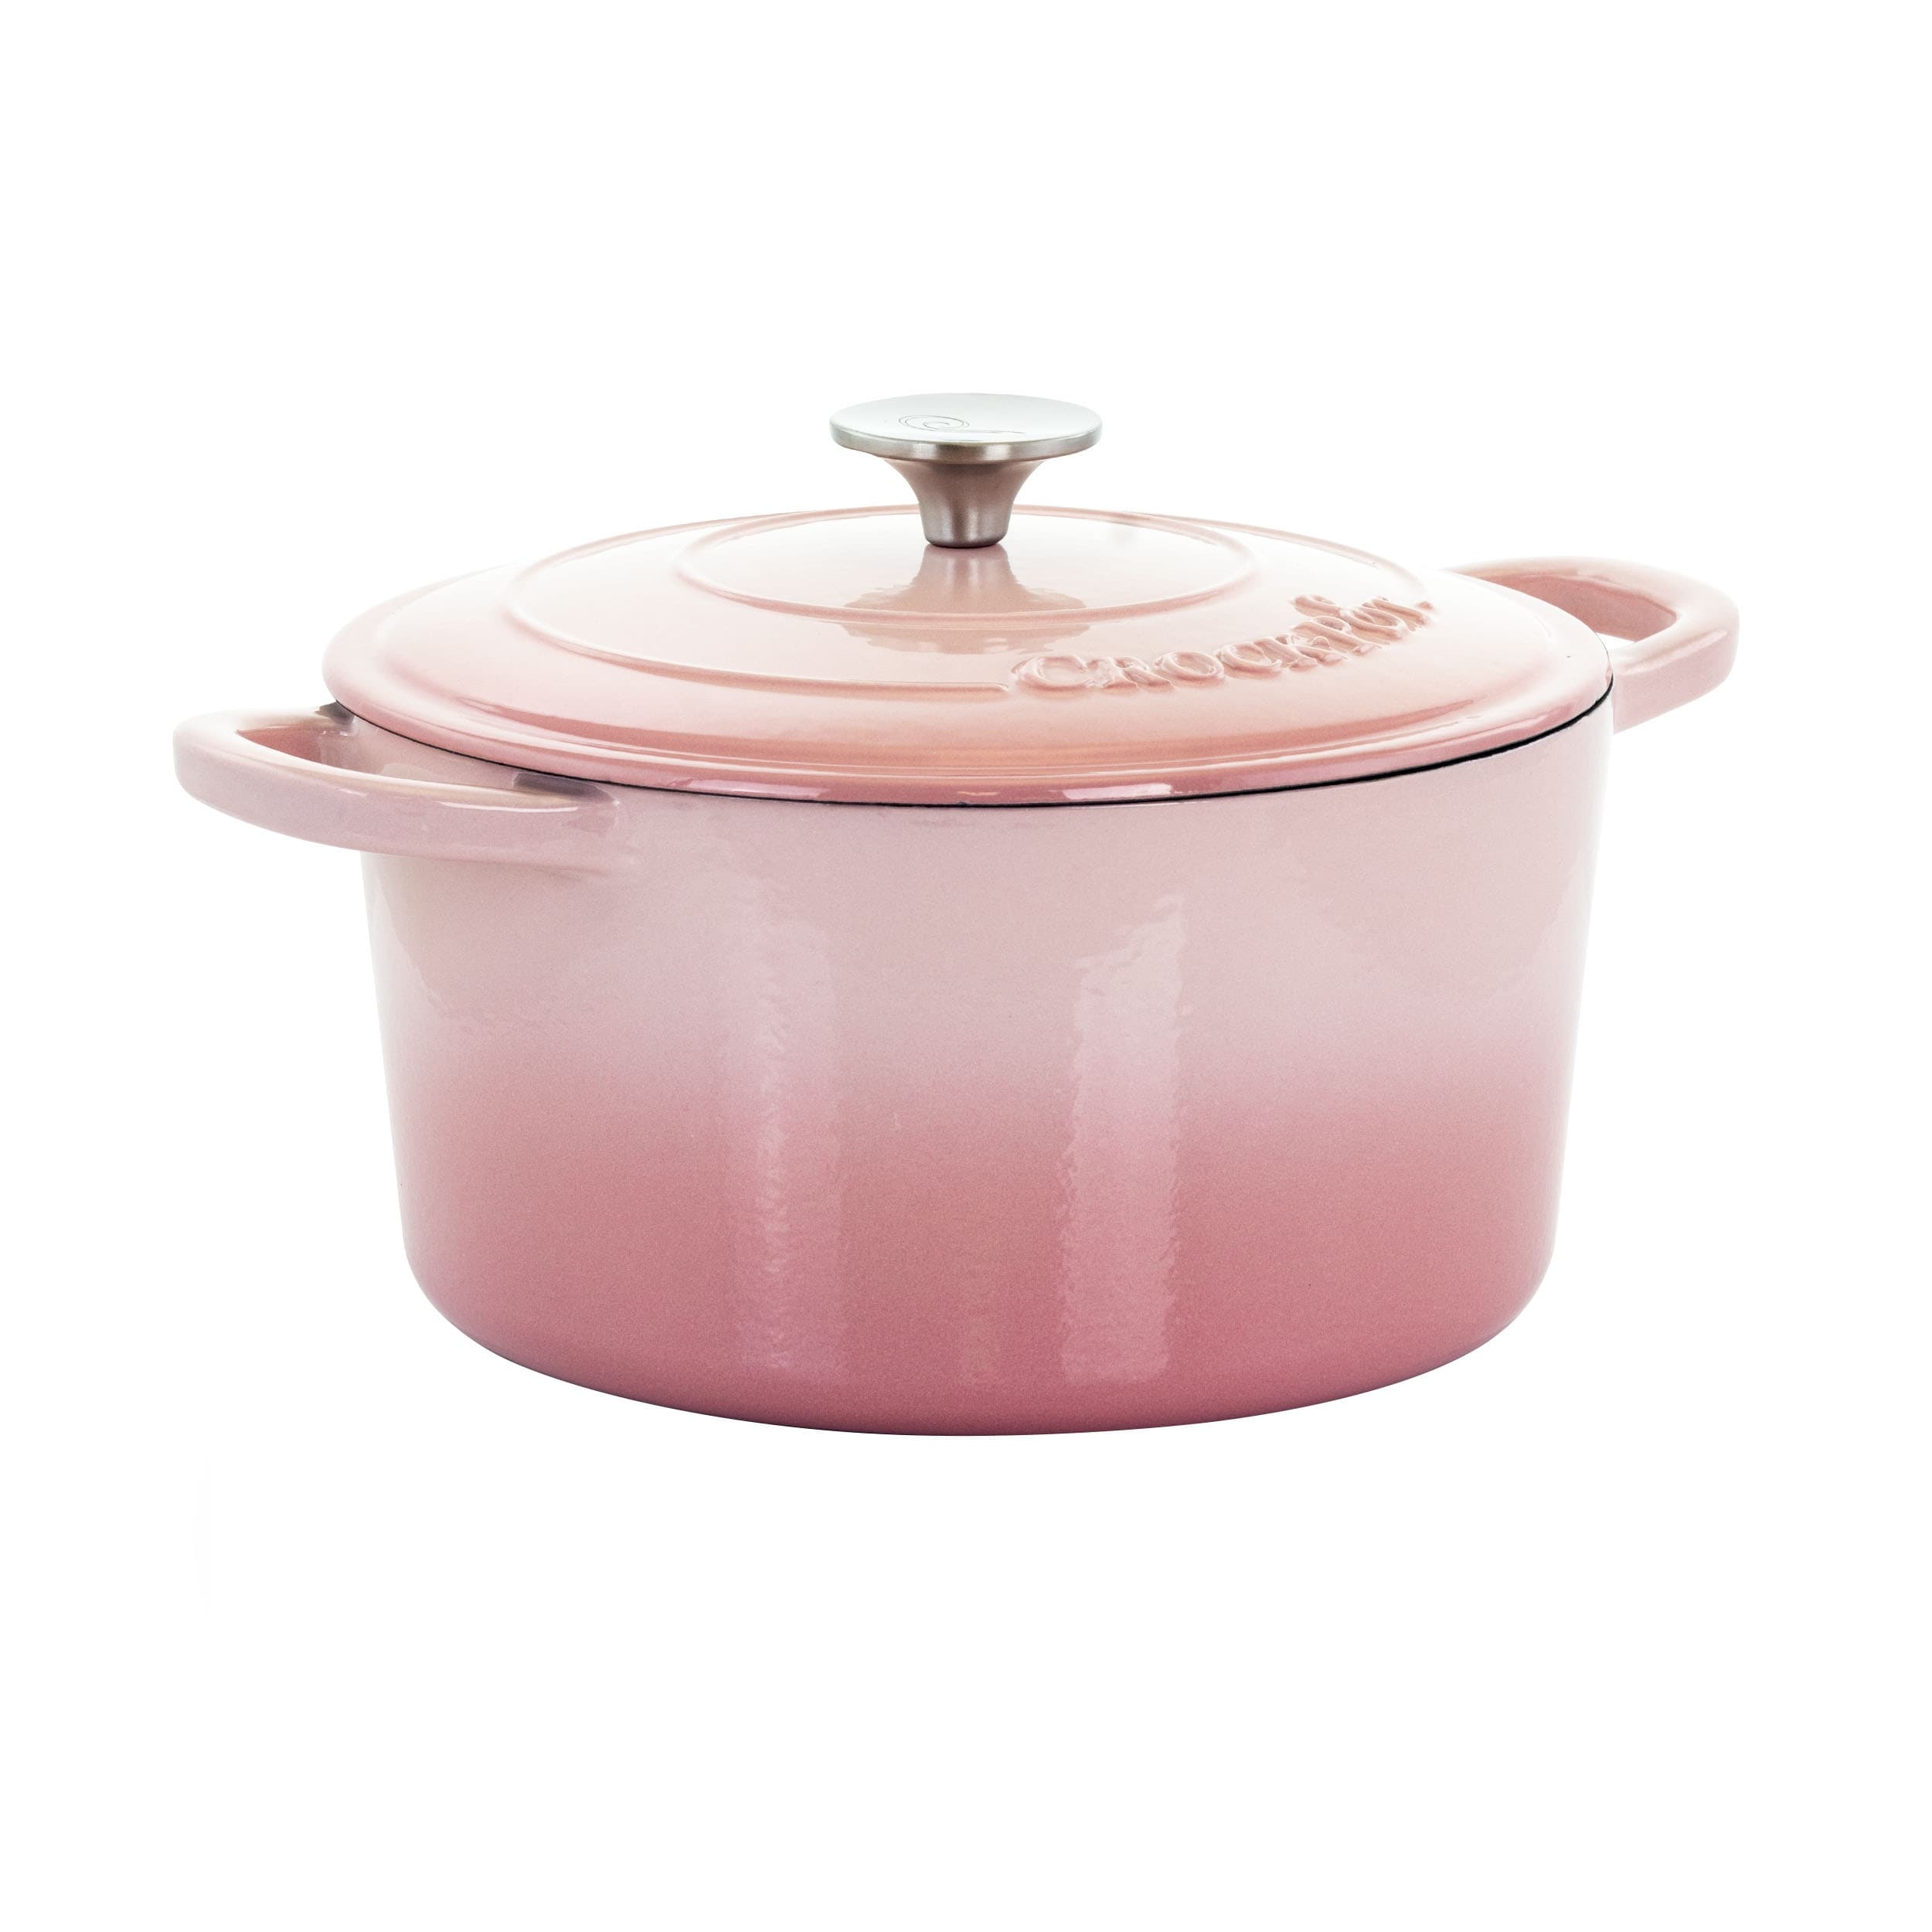 Crock-pot Artisan 5-Quart Cast Iron Dutch Oven, Blush Pink